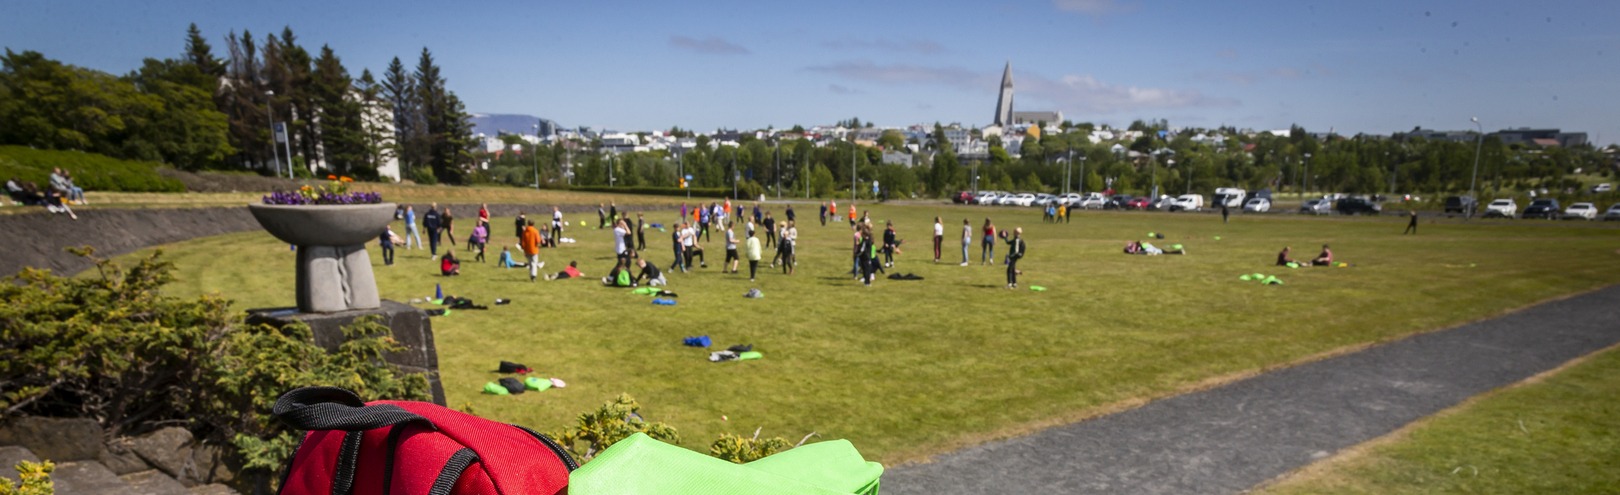 University of Youth back on track - Available at University of Iceland